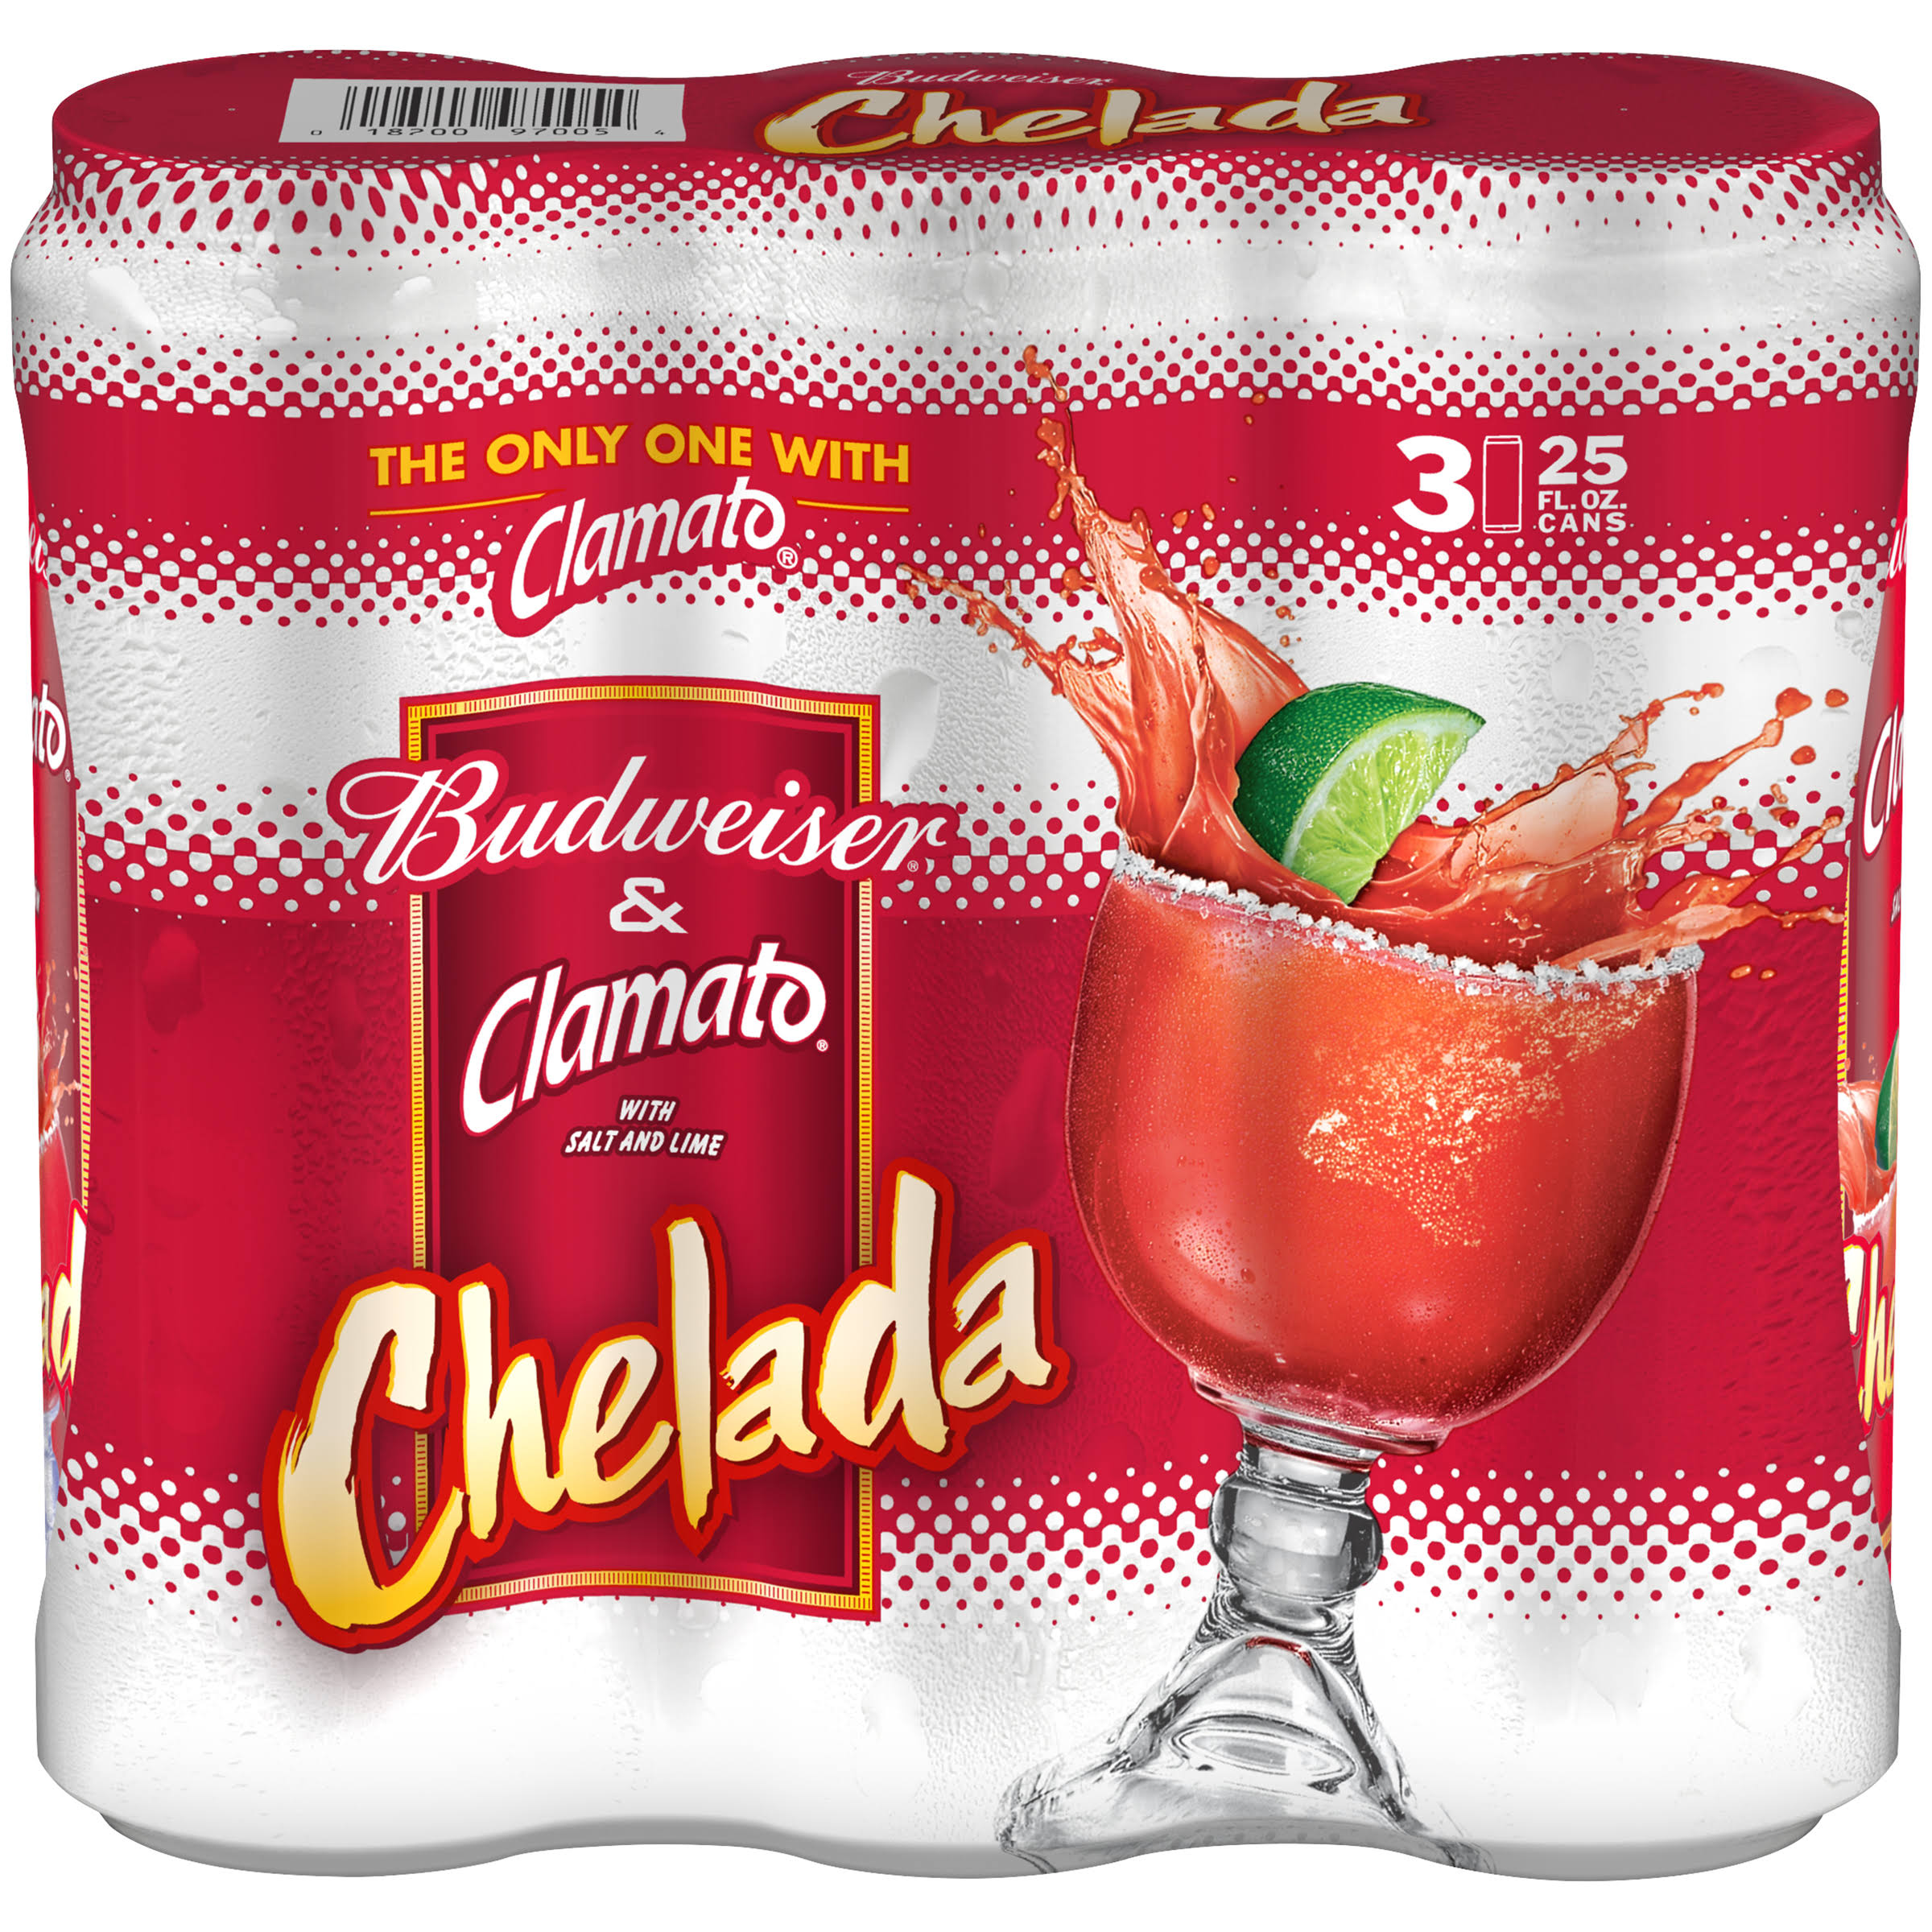 Budweiser & Clamato Chelada Beer - 3pk/25 fl oz Cans